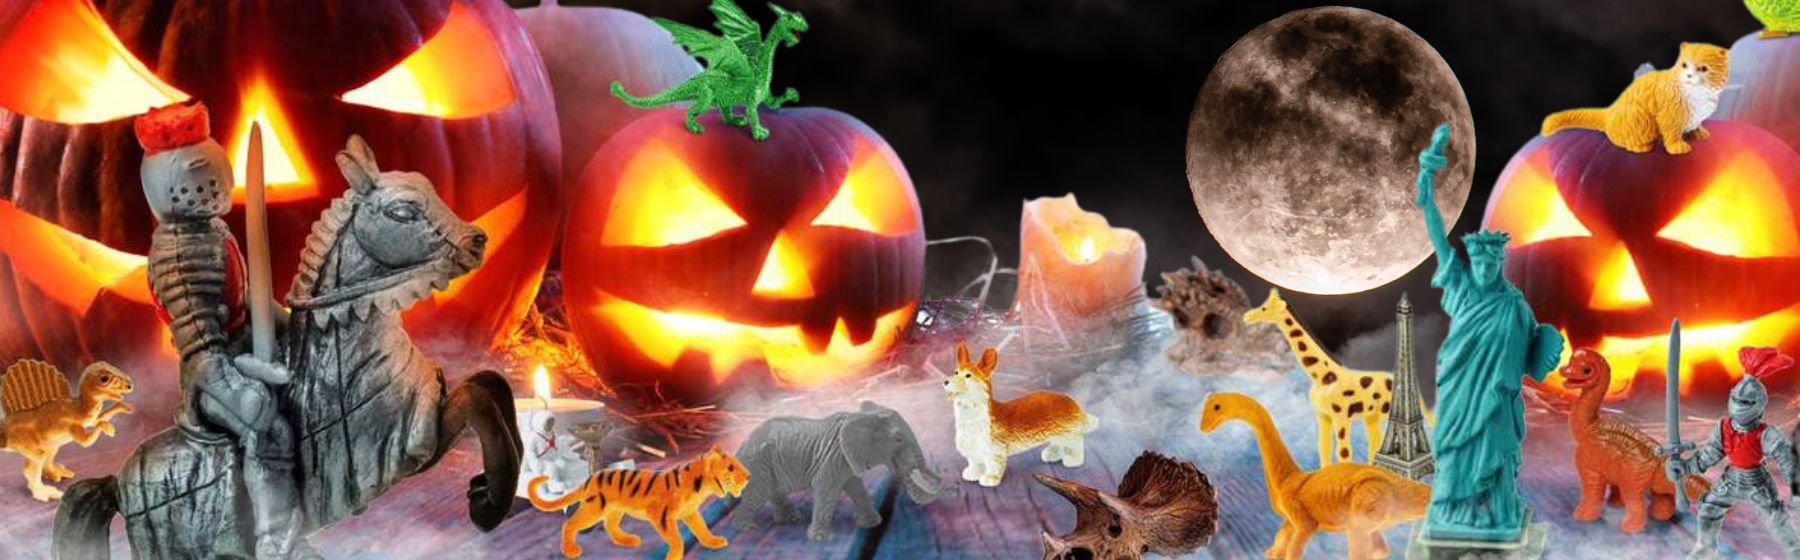 Spooky Fun without the Sugar: Mini Toys as Halloween Treats - Safari Ltd®